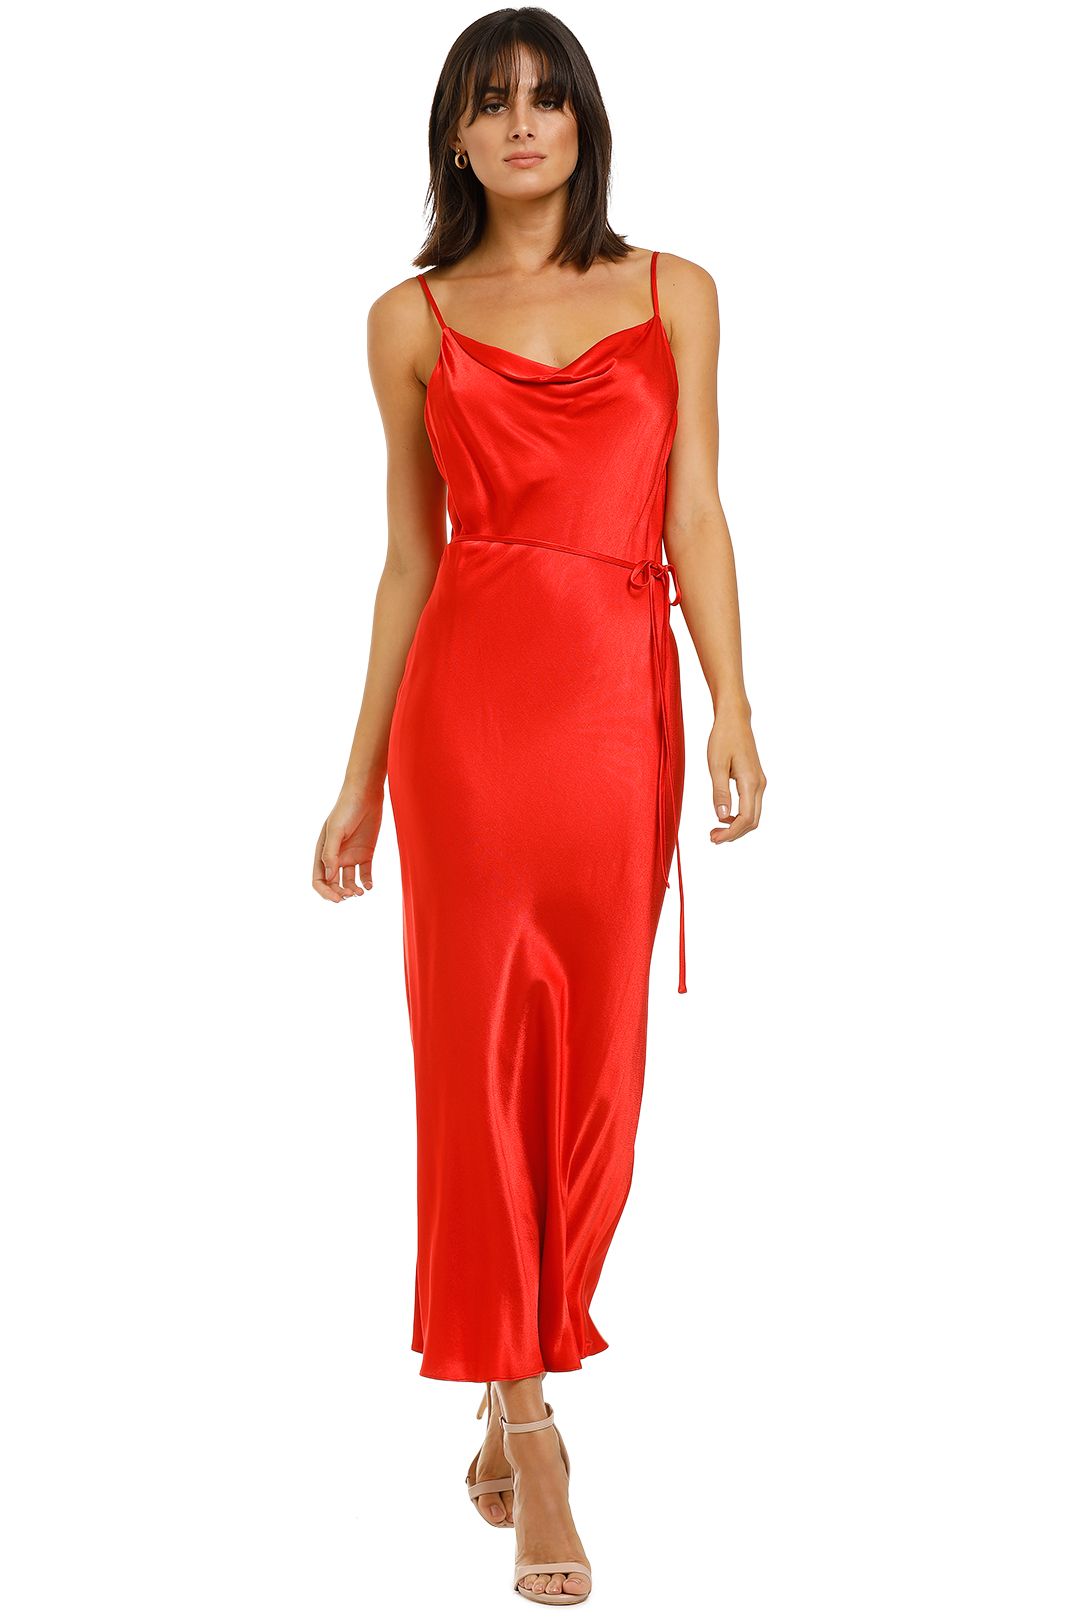 Bias Slip Dress in Red by Shona Joy for ...